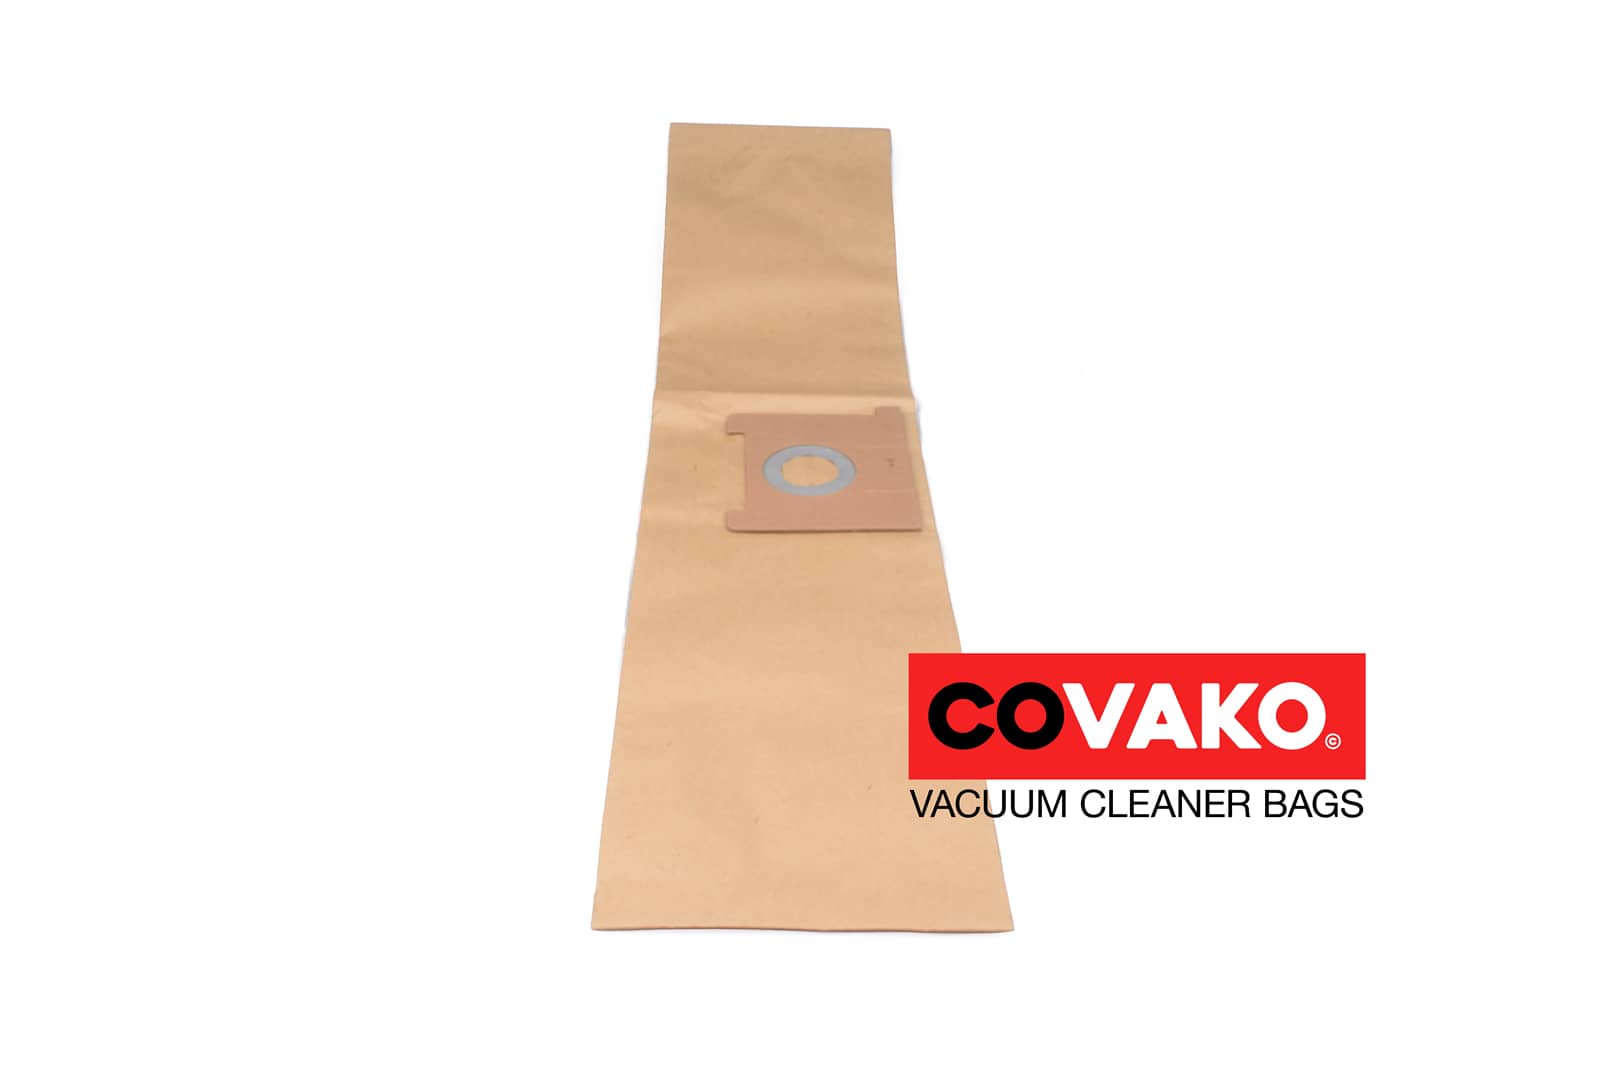 Clean a la Card C 09 / Paper - Clean a la Card vacuum cleaner bags